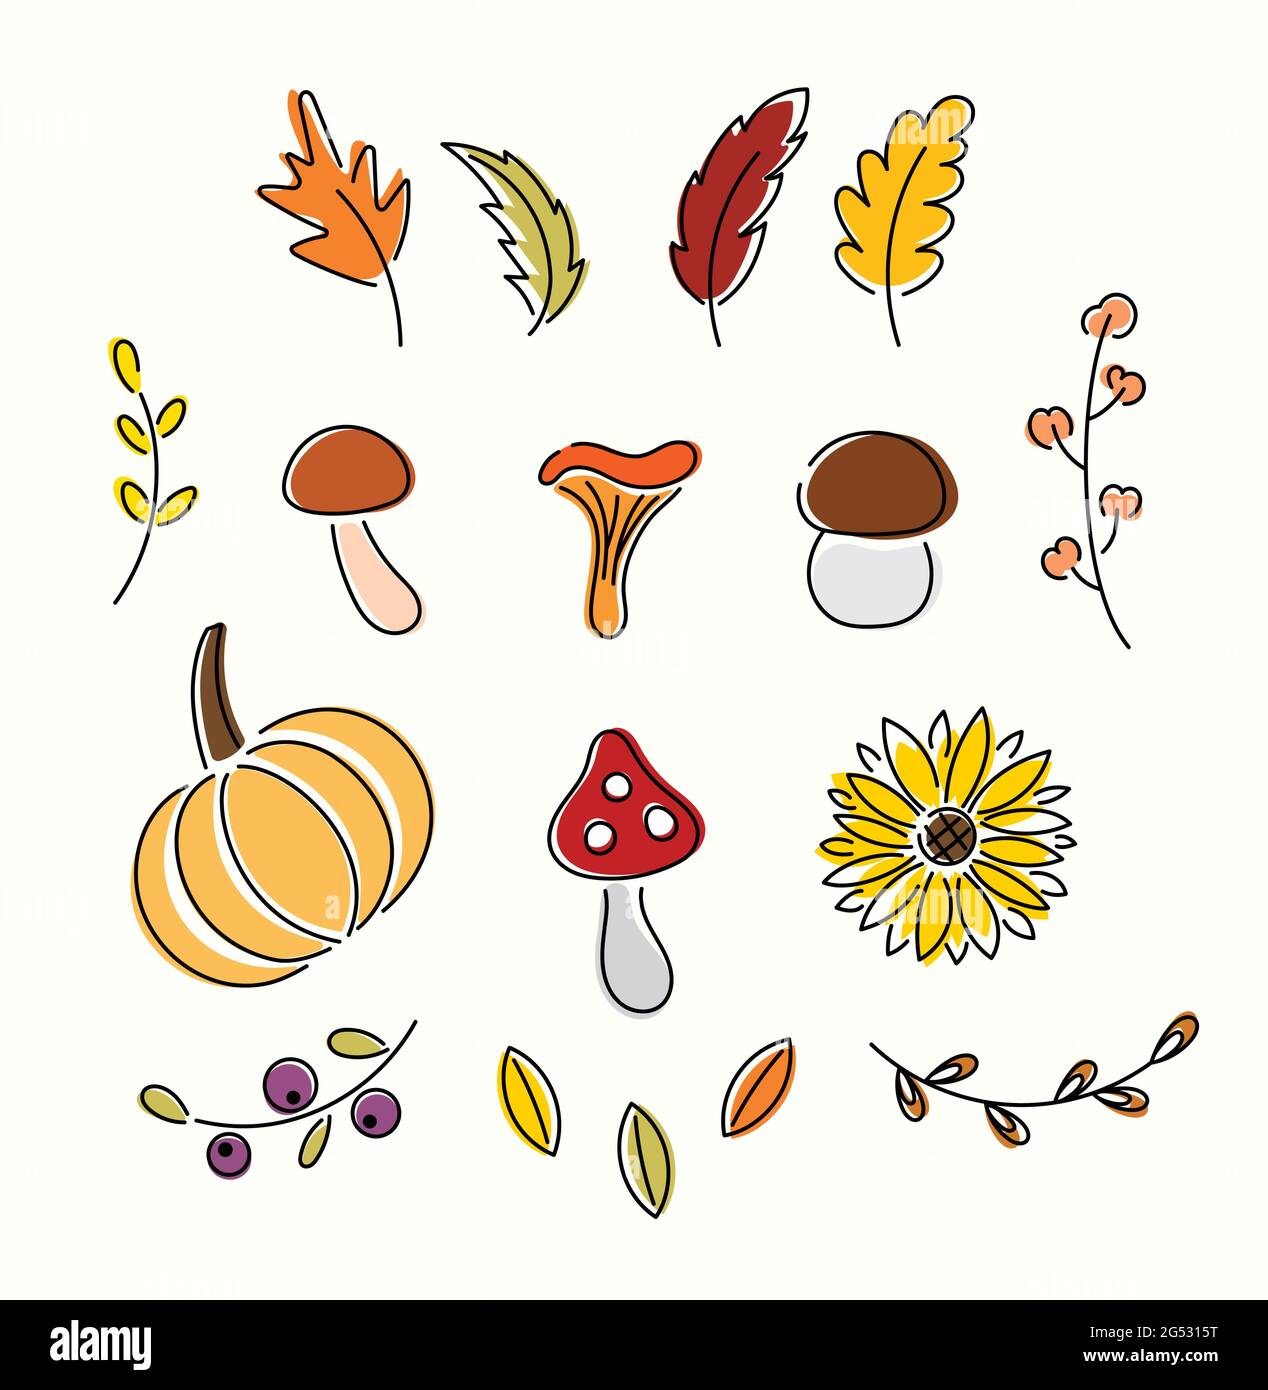 autumn drawings tumblr